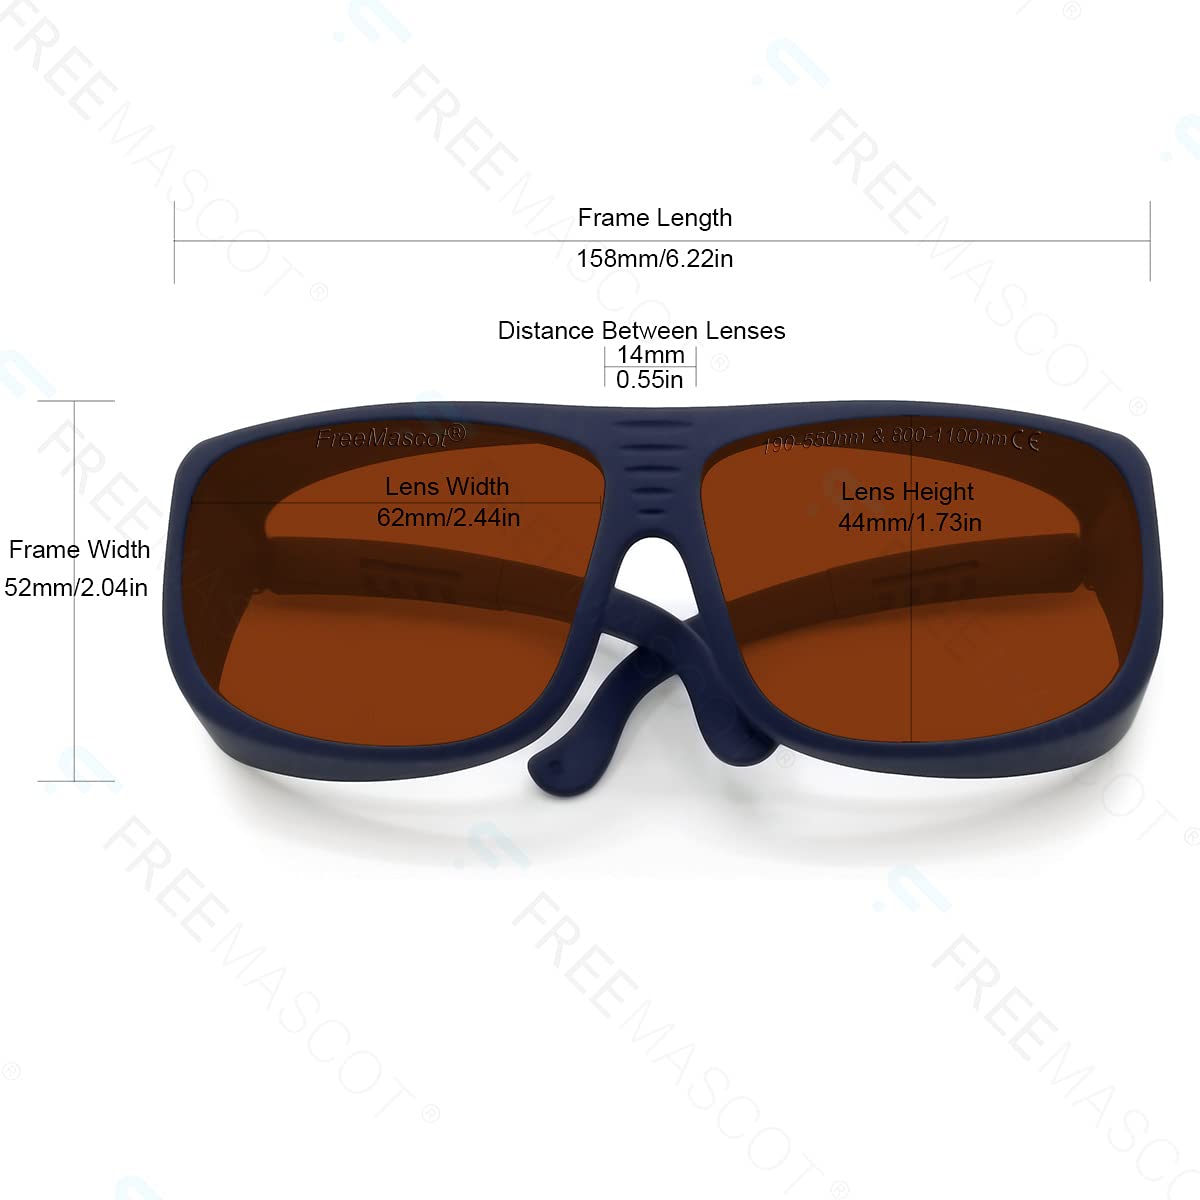 FreeMascot OD 4+ 190nm-550nm / 800nm-1100nm Wavelength Professional Laser Safety Glasses for 405nm, 450nm, 532nm, 808nm,980nm,1064nm, 1080nm, 1100nm Laser (Style 5)